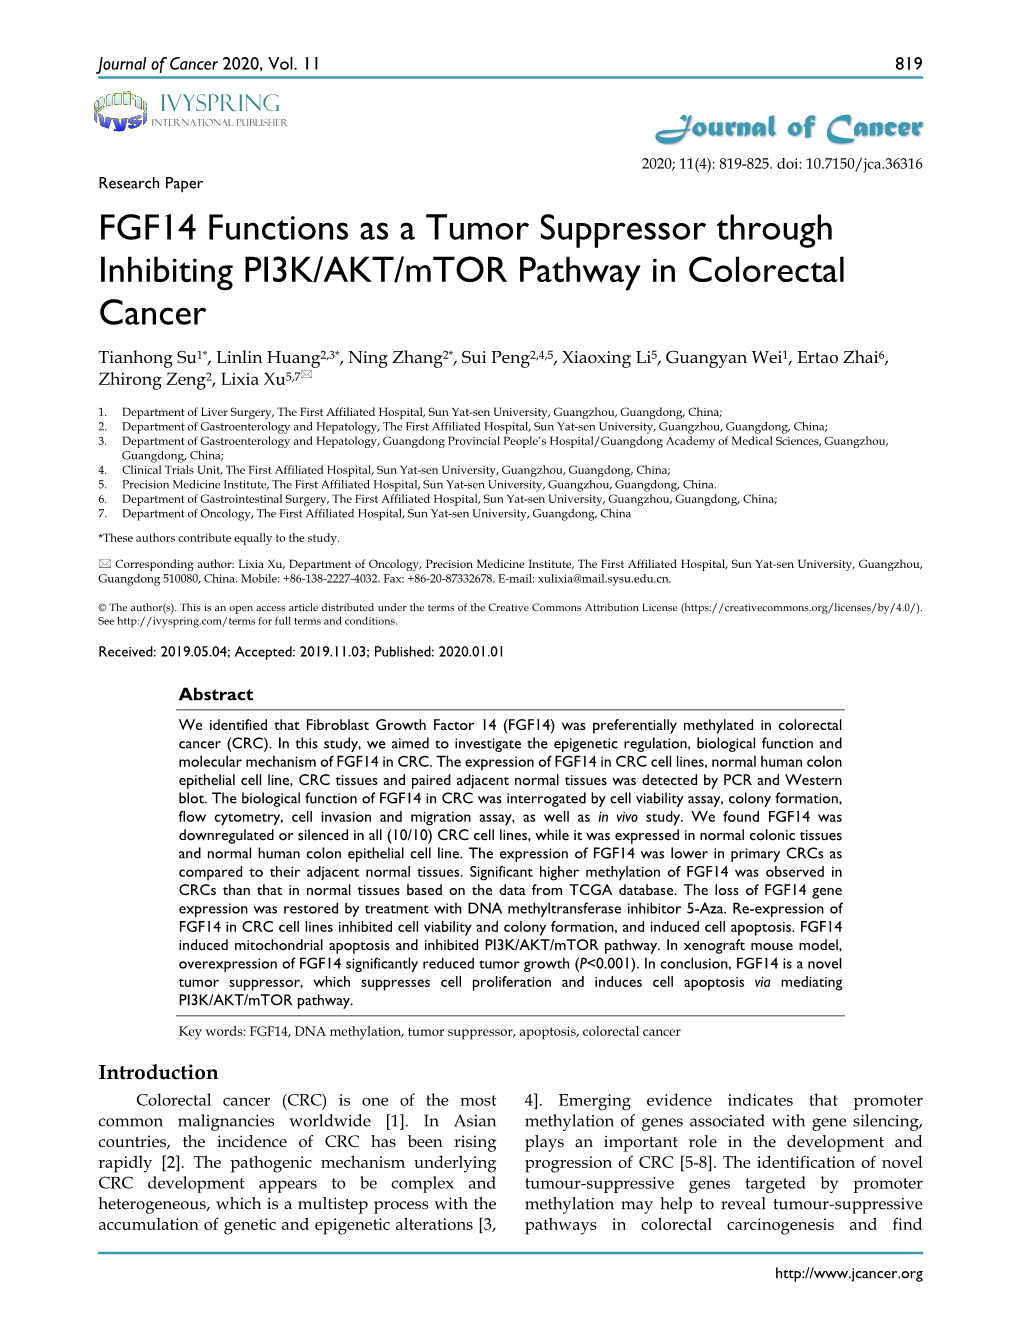 FGF14 Functions As a Tumor Suppressor Through Inhibiting PI3K